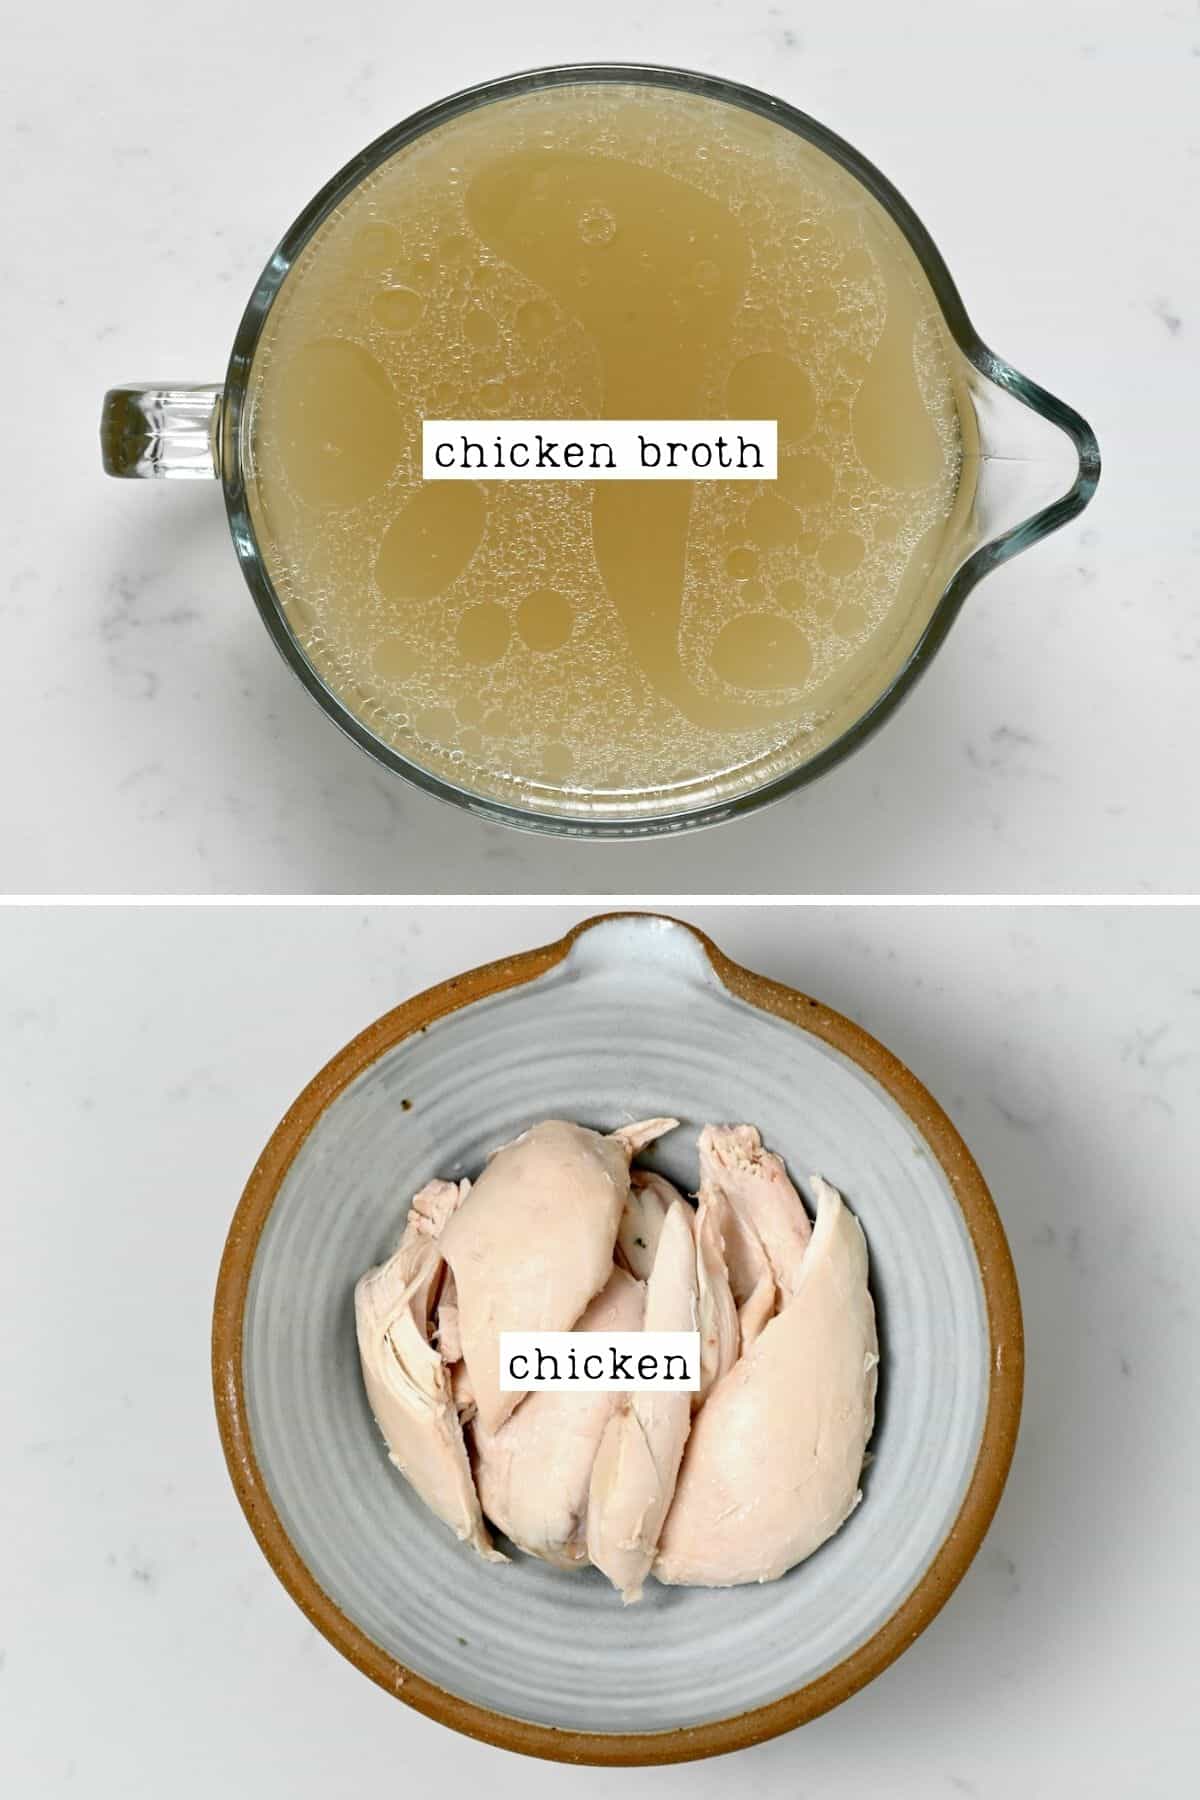 Chicken broth and chicken